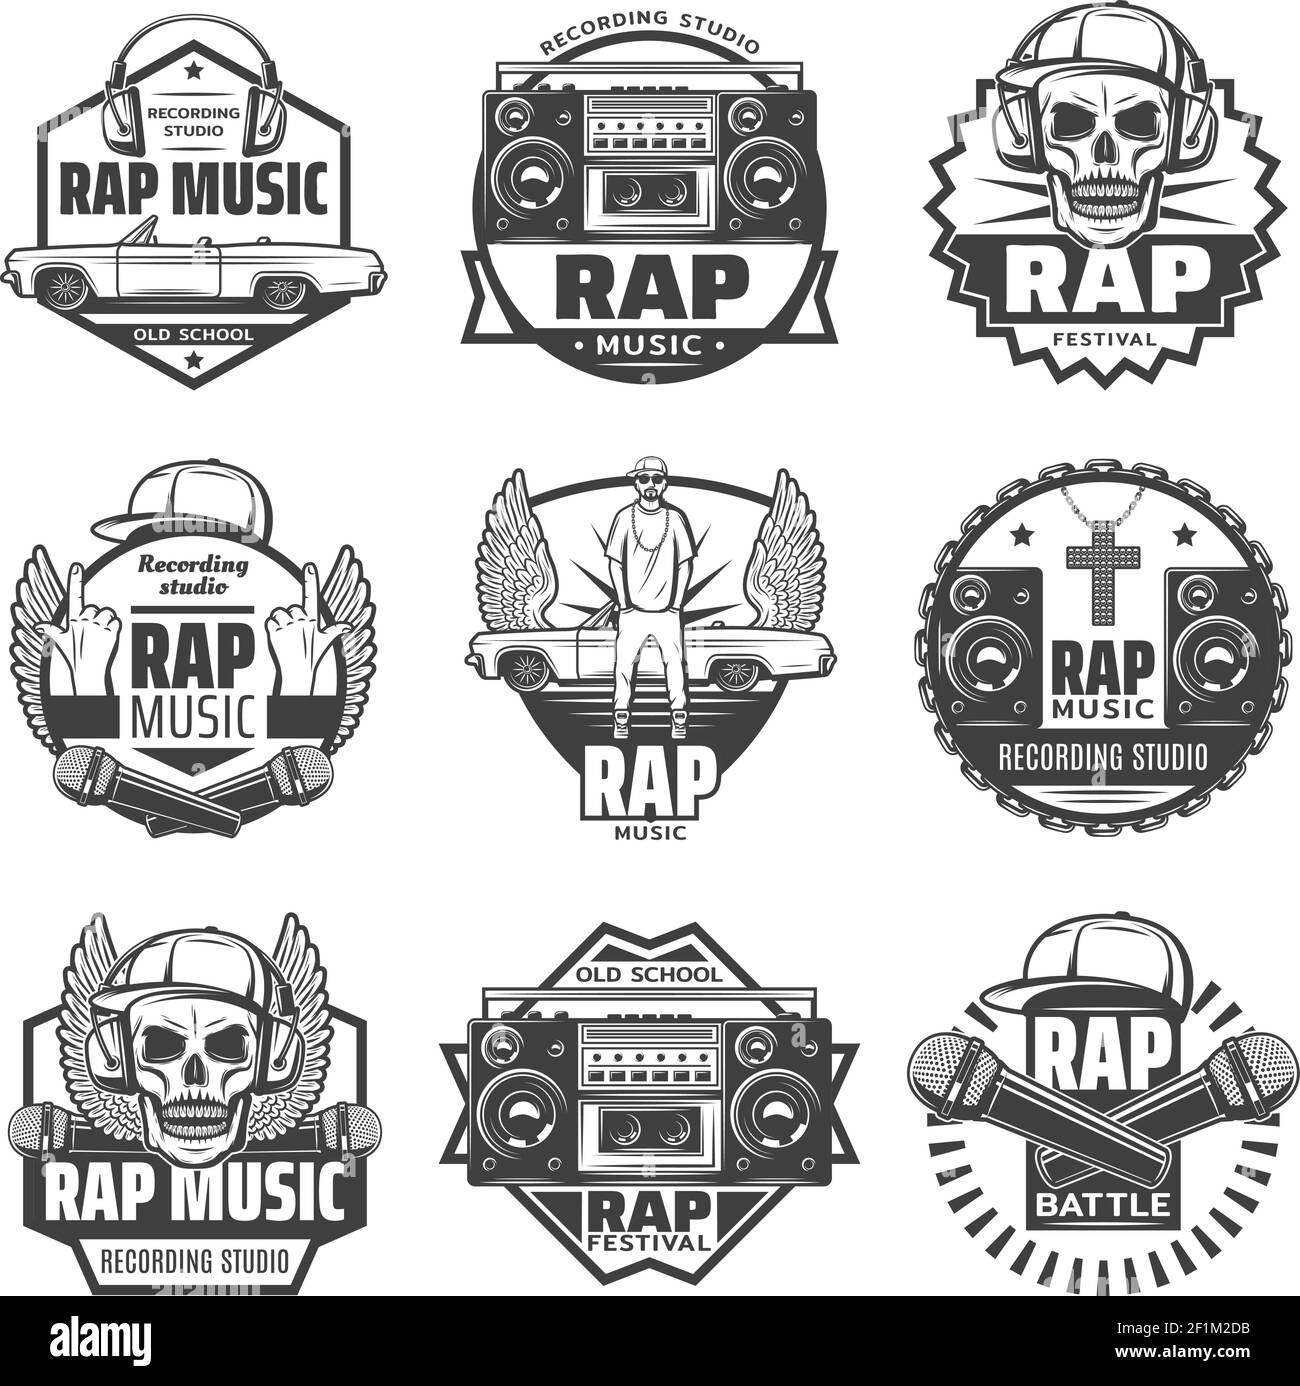 Rap logo Black and White Stock Photos & Images - Alamy